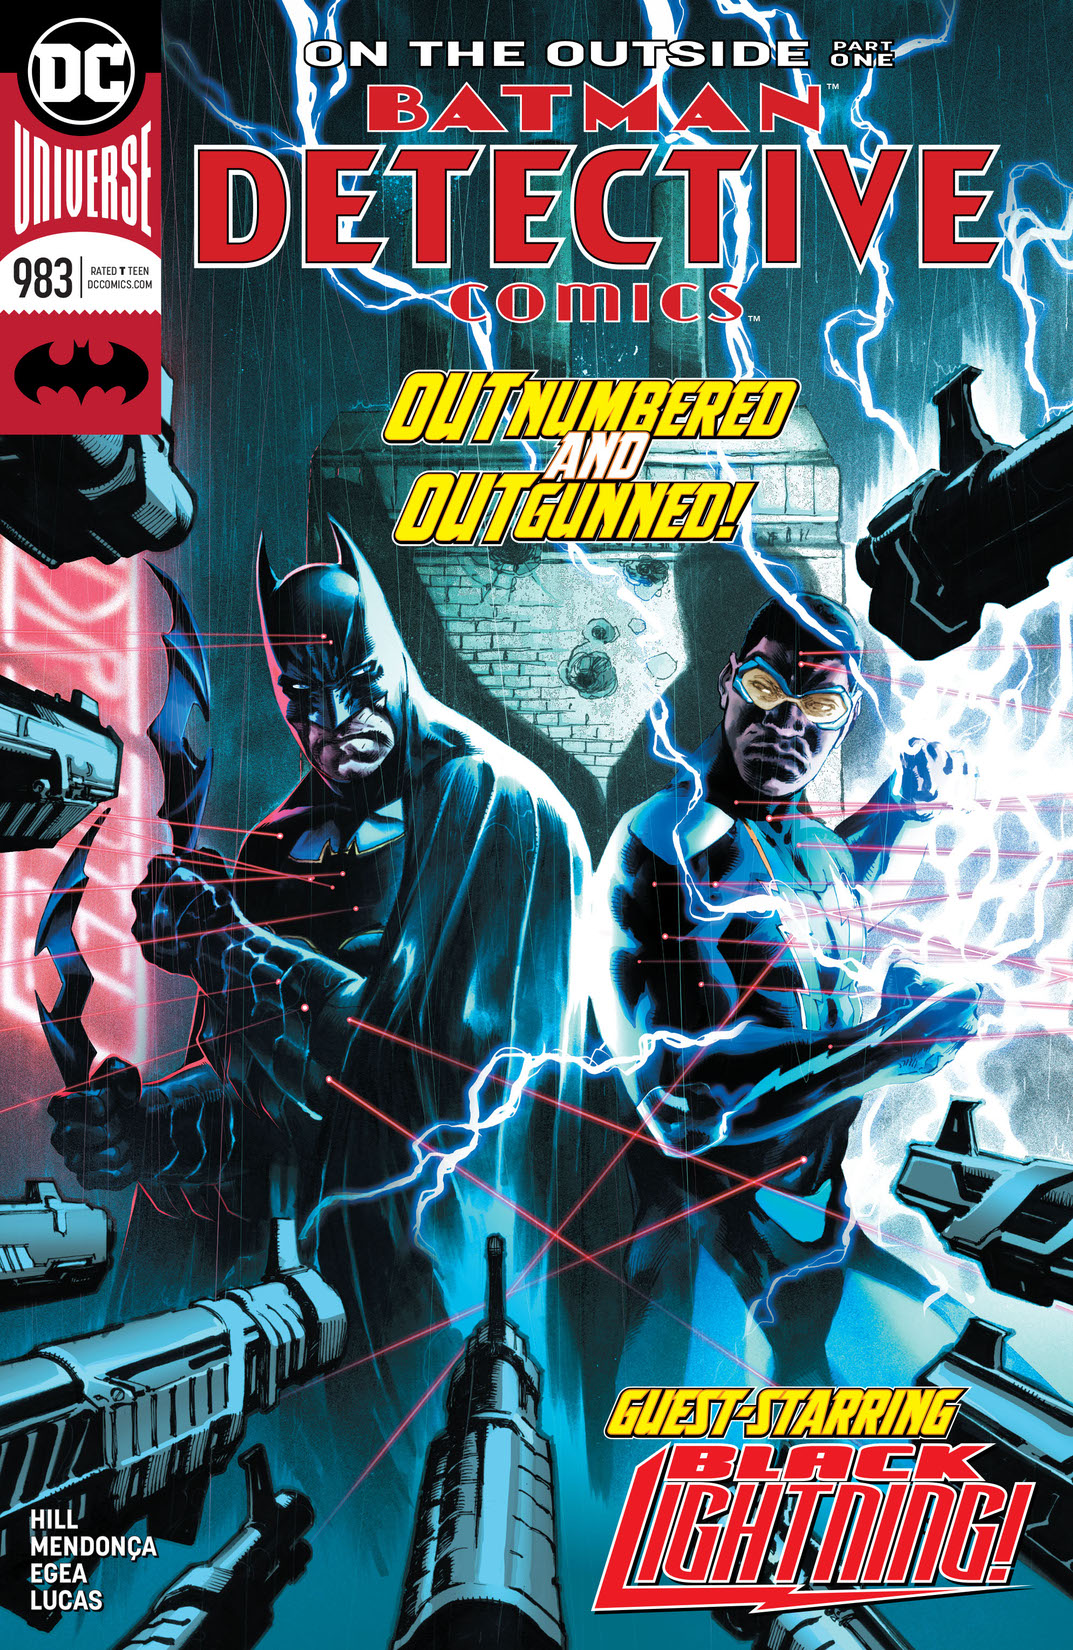 Detective Comics (2016-) #983 preview images